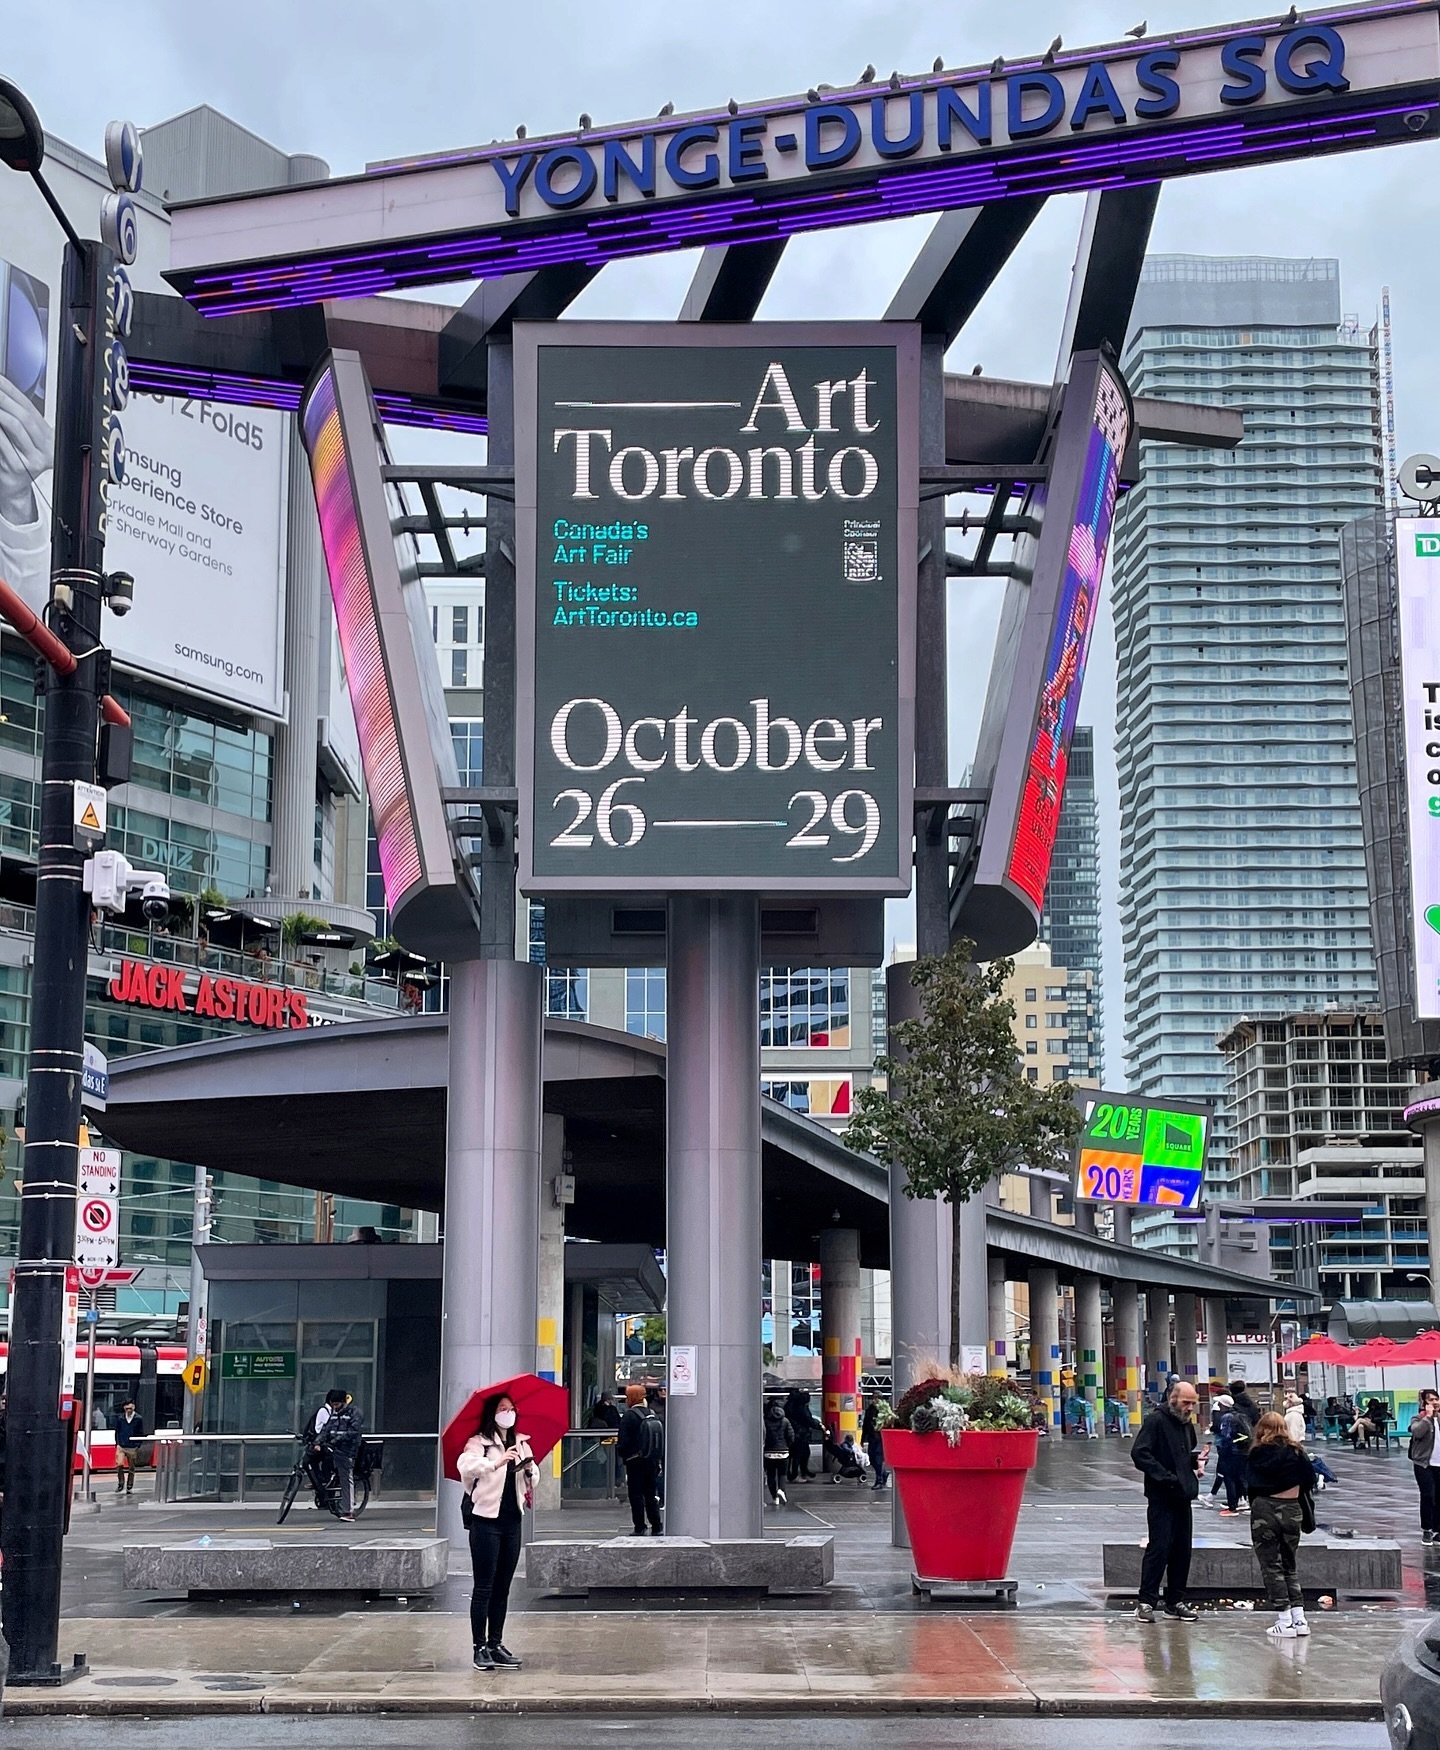 Recent work for Art Toronto, Canada&rsquo;s oldest and largest international art fair.

@art_toronto 

#branding #design #graphicdesign #visualidentity #artdirection #branddesign #advertising #typography #signage #wordmark #typography #designbysalita